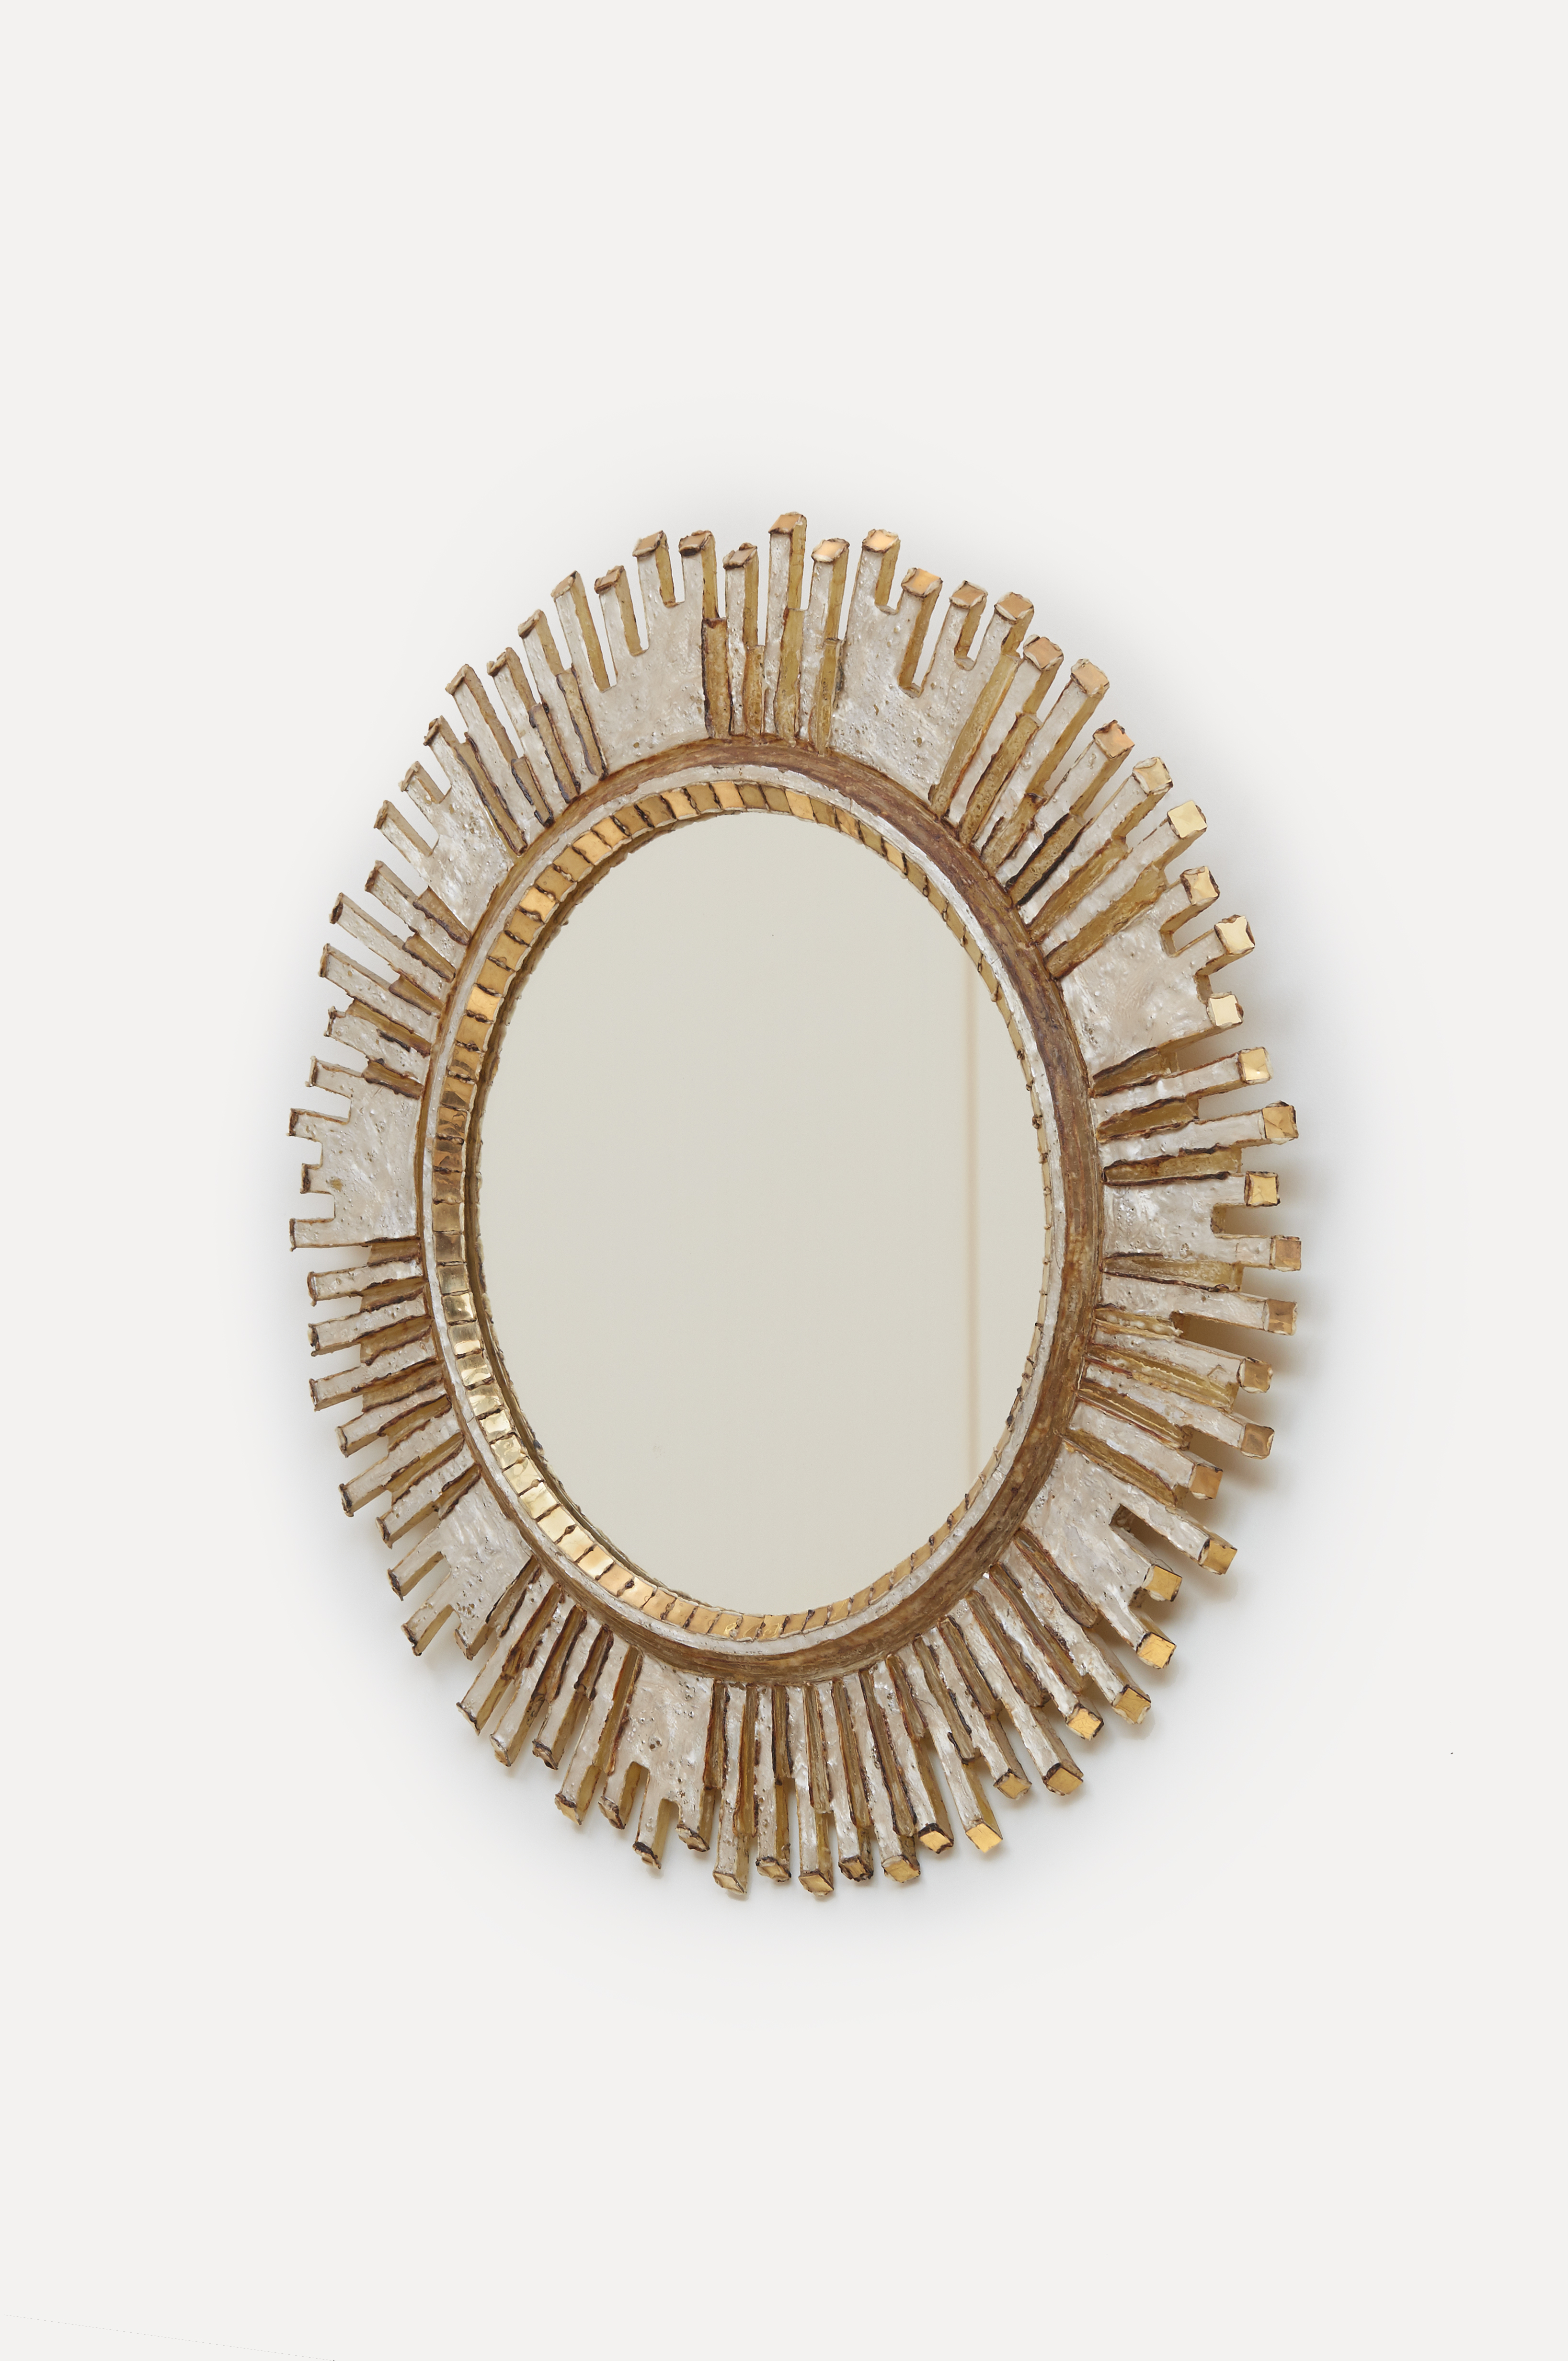 Line Vautrin, “Solaire” mirror, vue 01